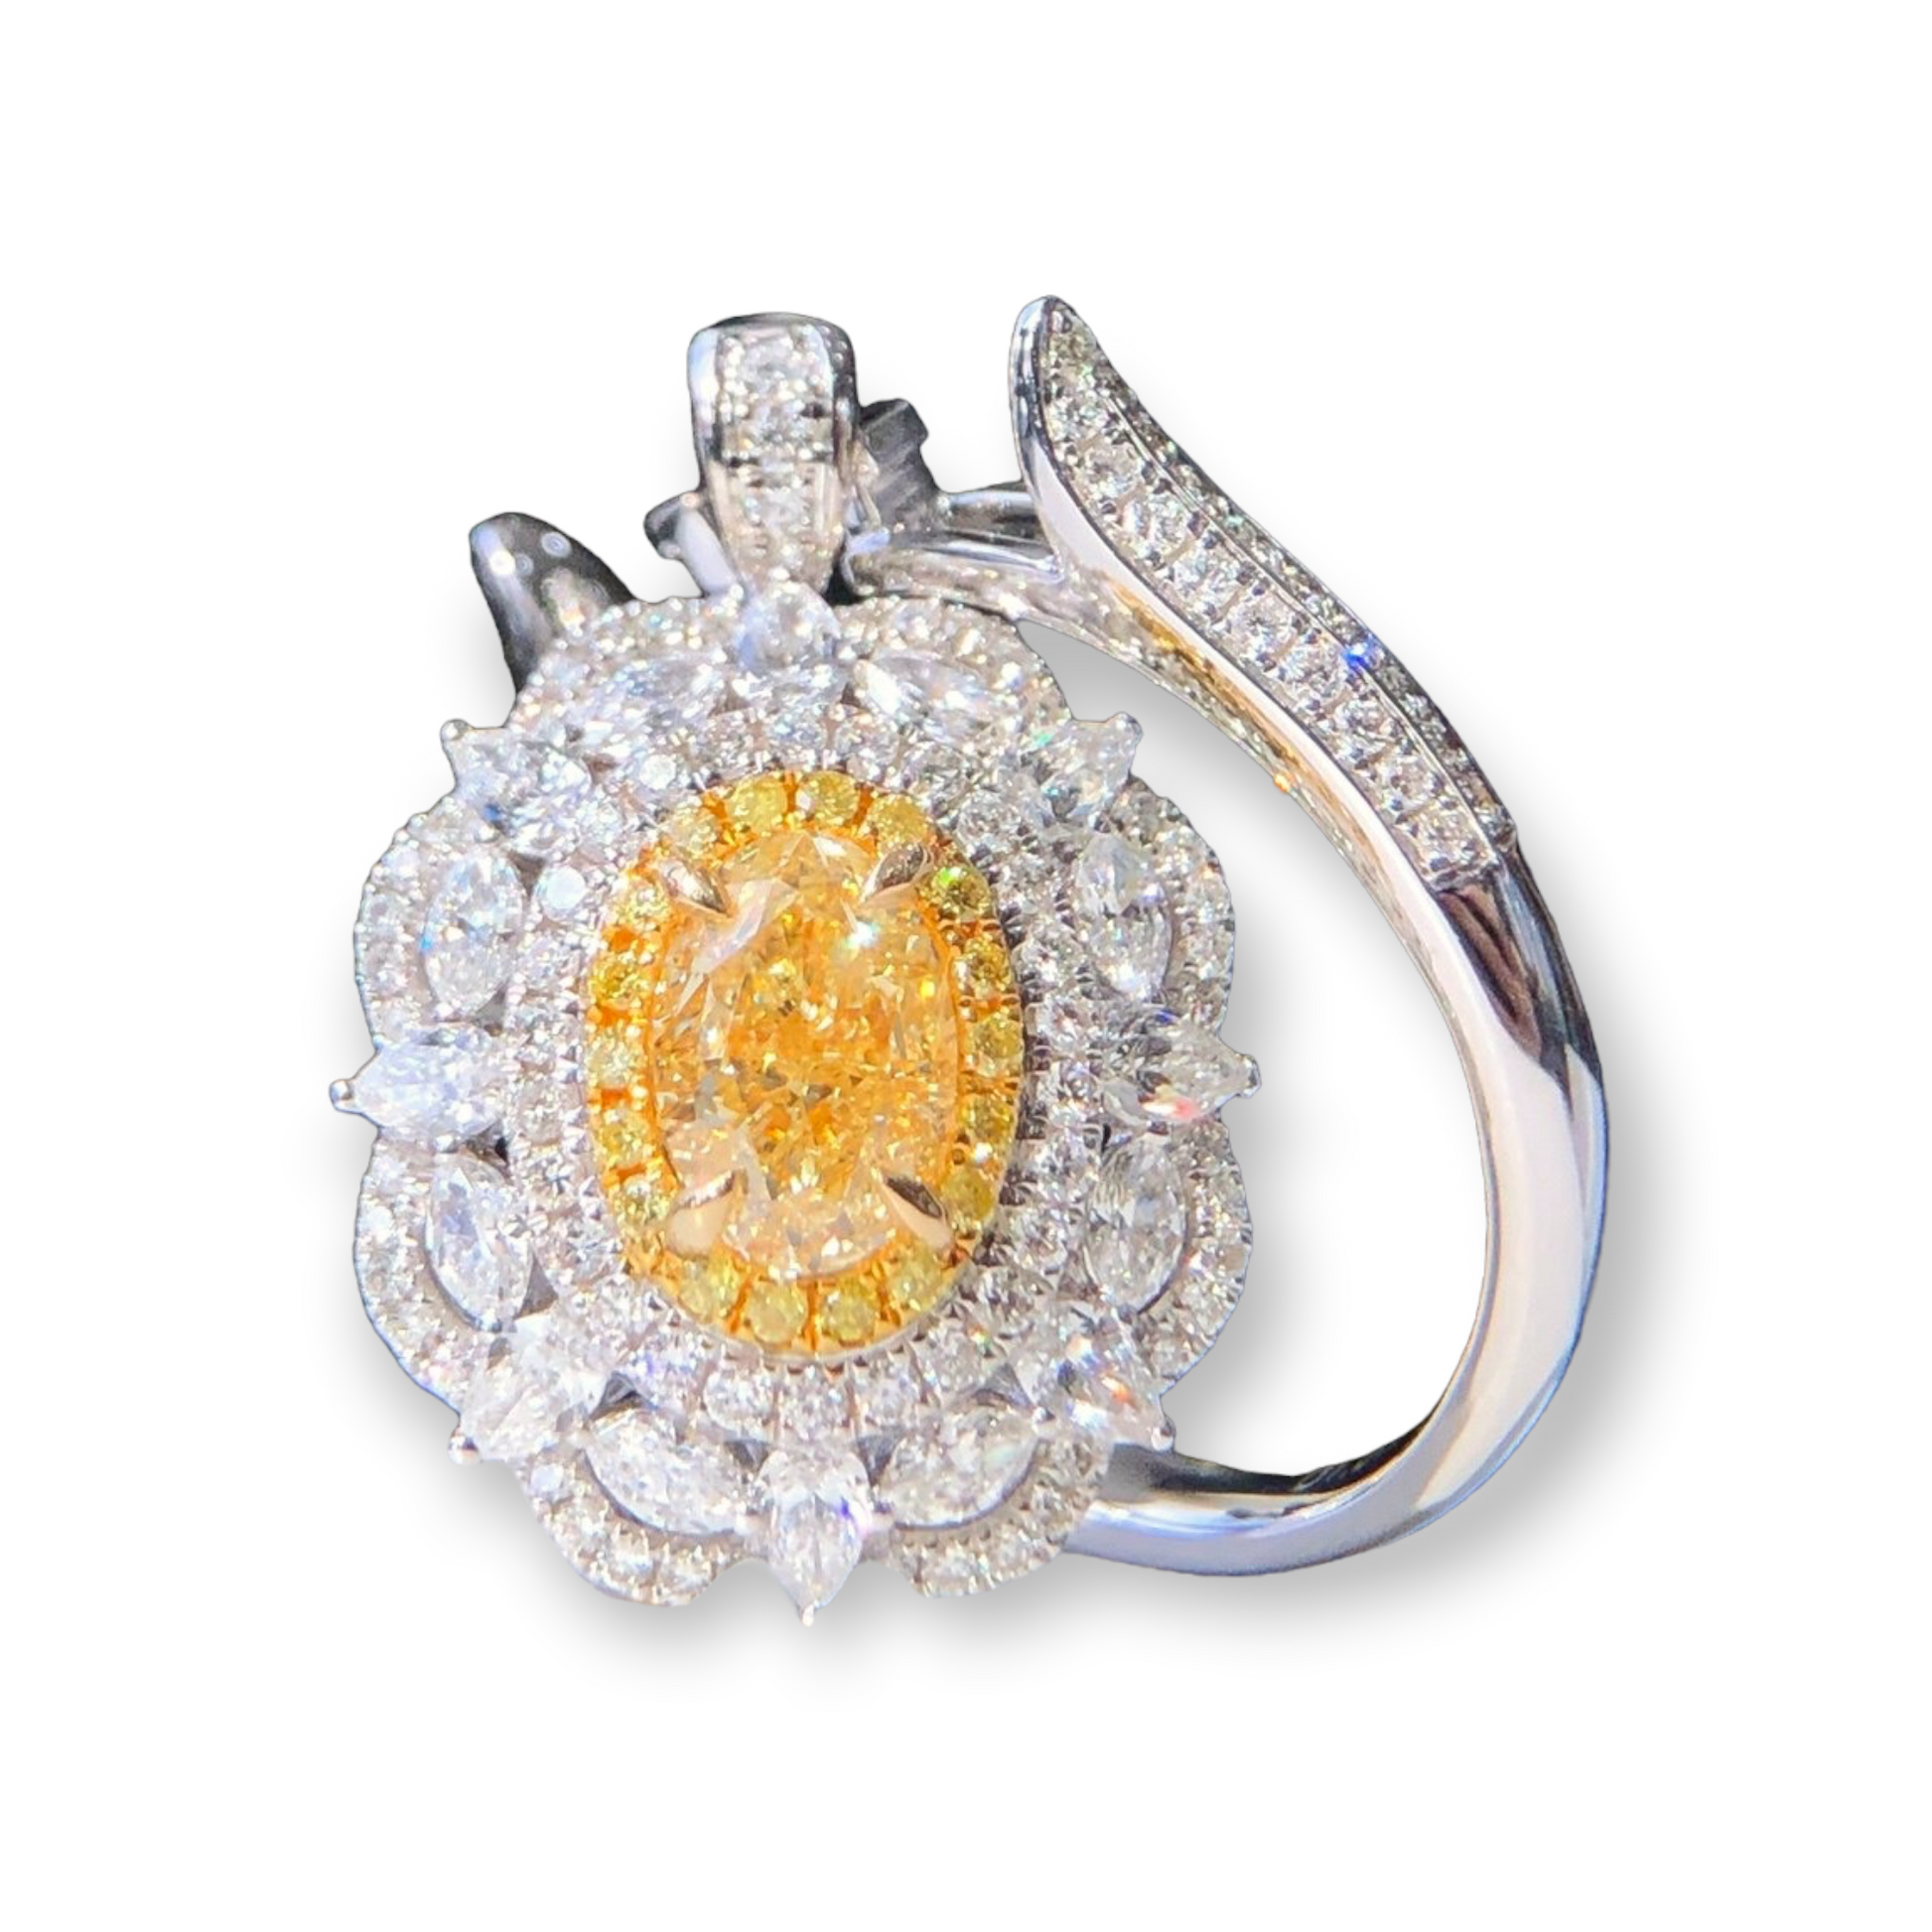 ZUPSTYLE Brilliant Oval Yellow Diamond Halo White Diamond Ring in 18K White Gold